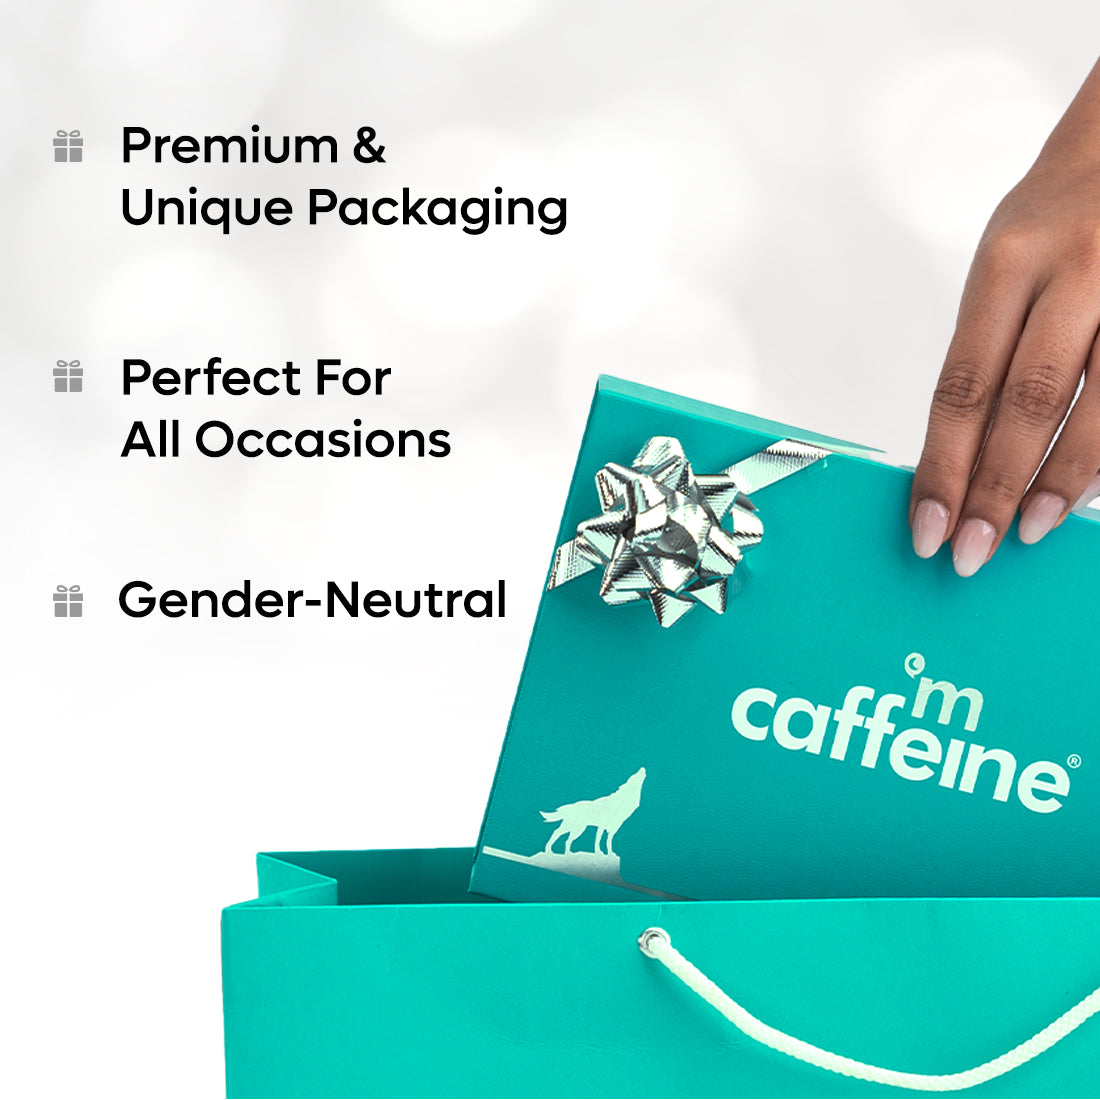 mCaffeine Coffee Glam Body Care Kit